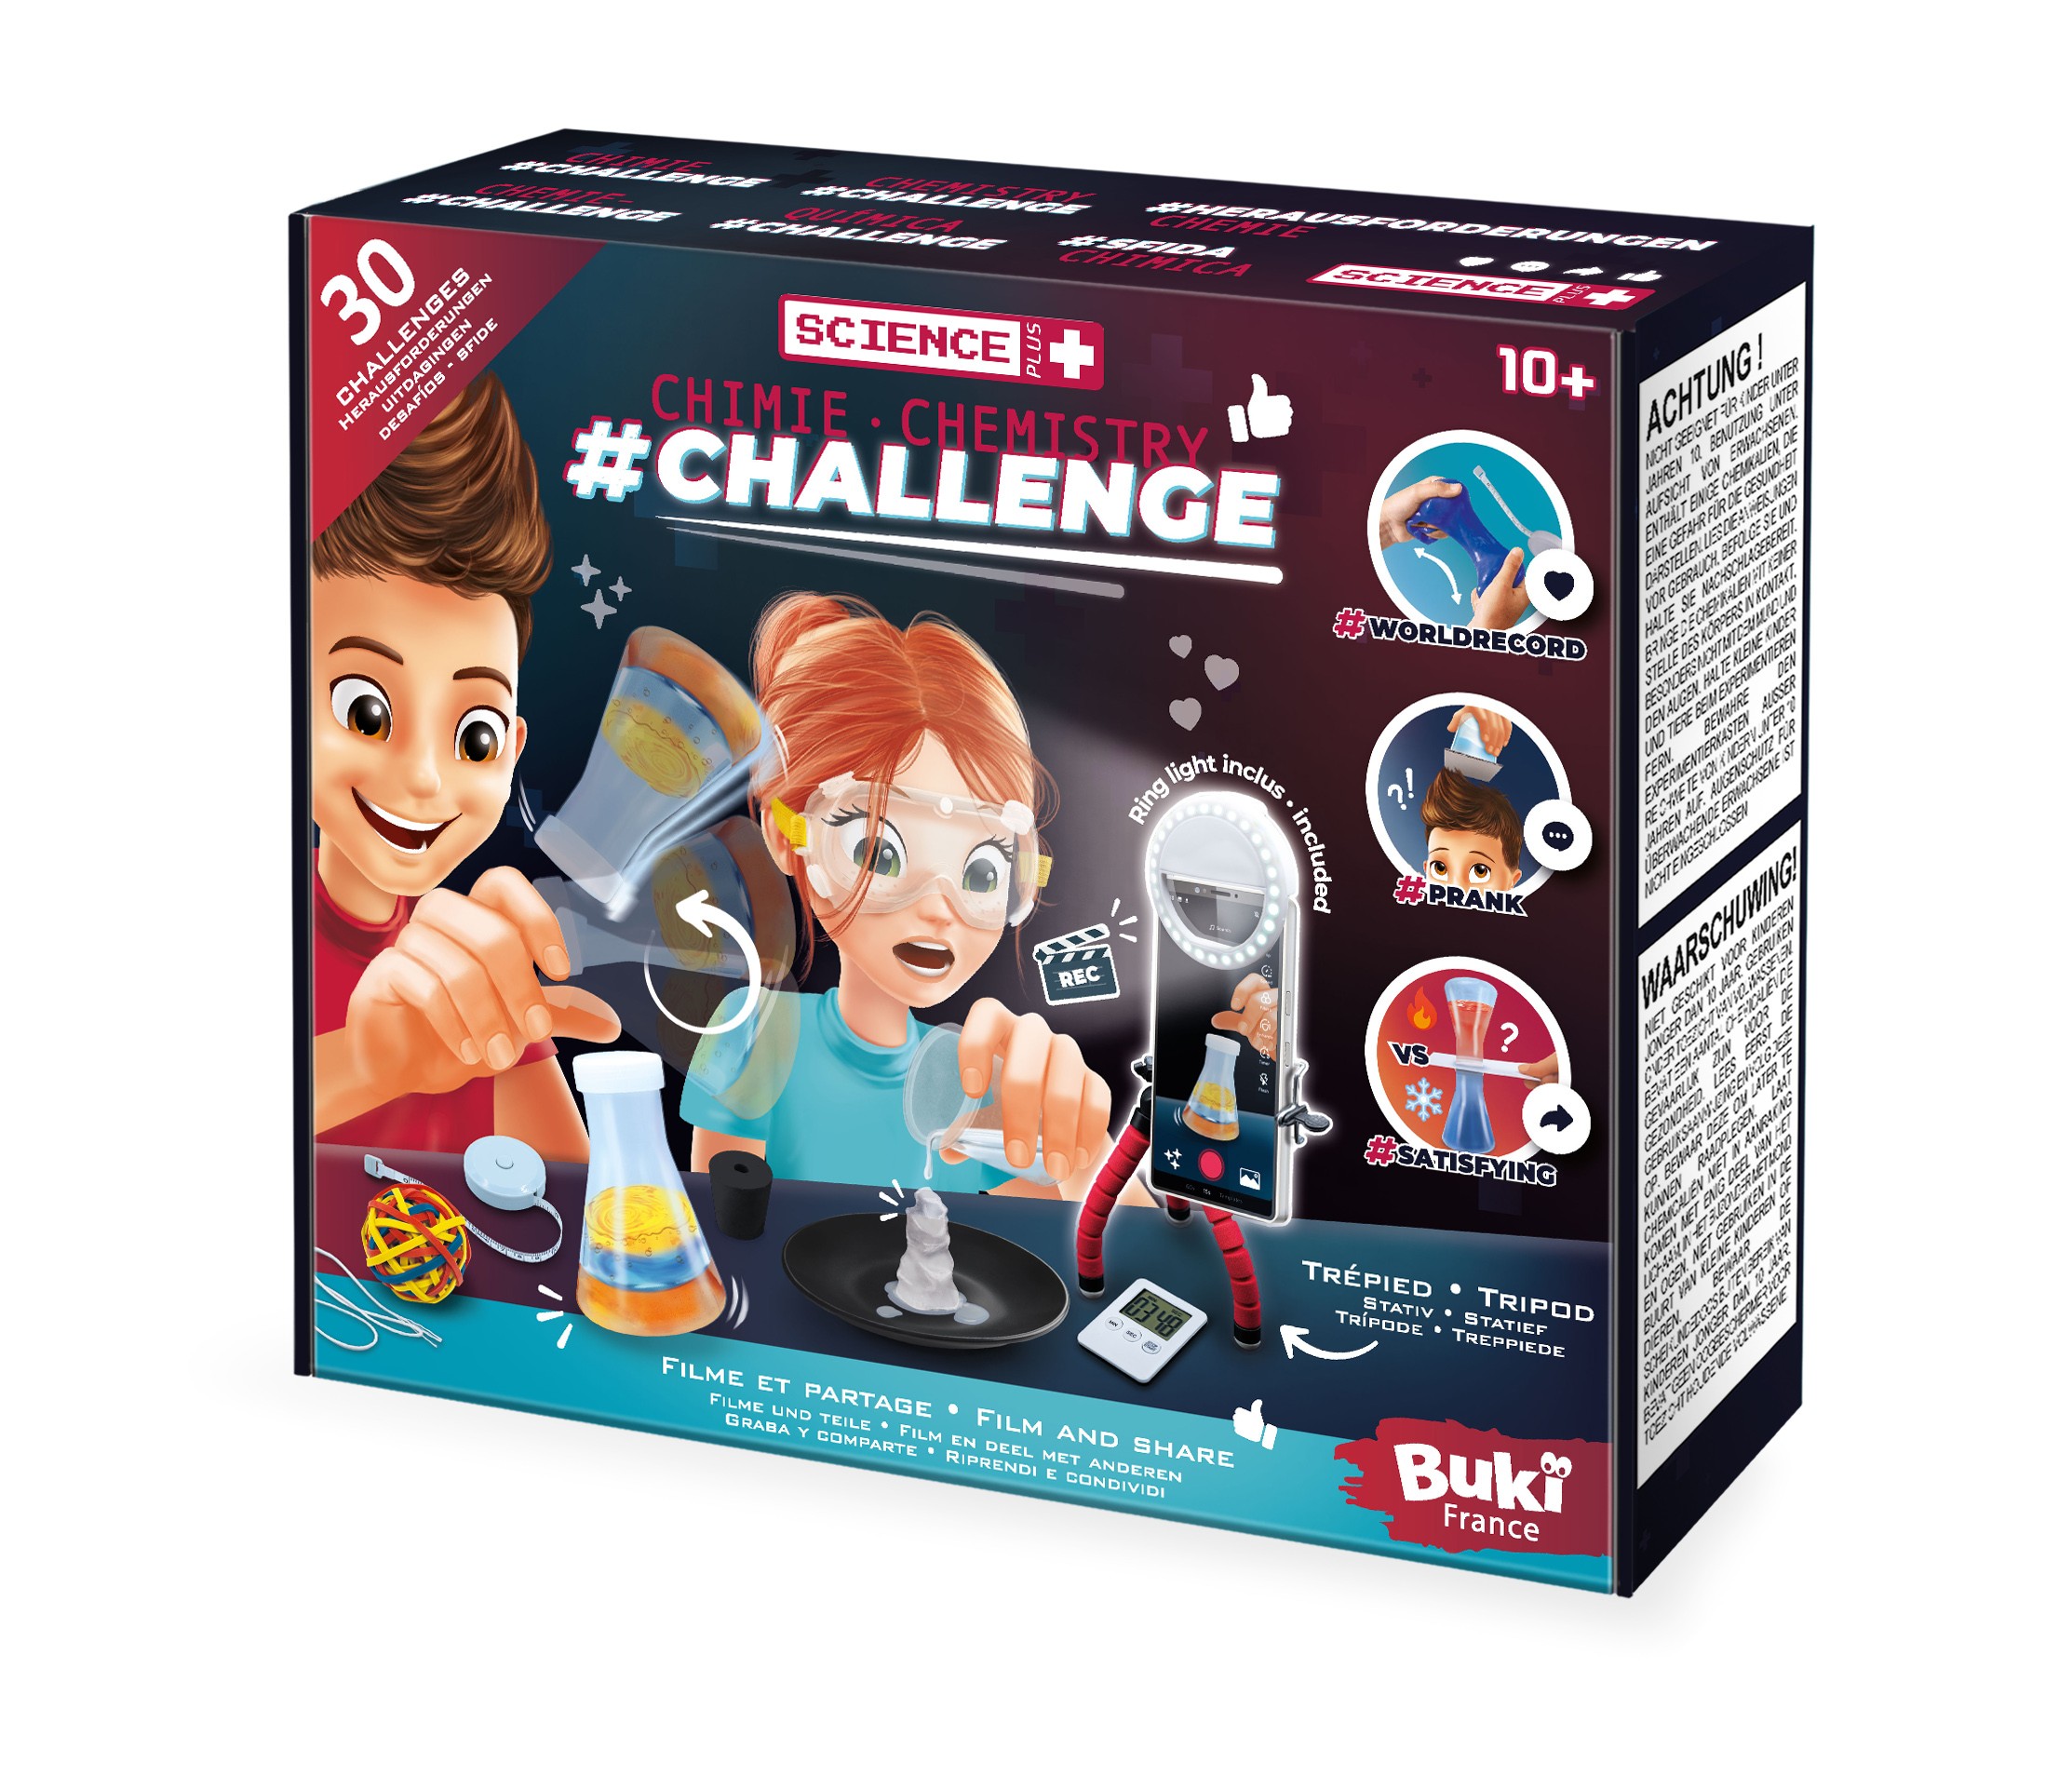 Chimie challenge - Buki France